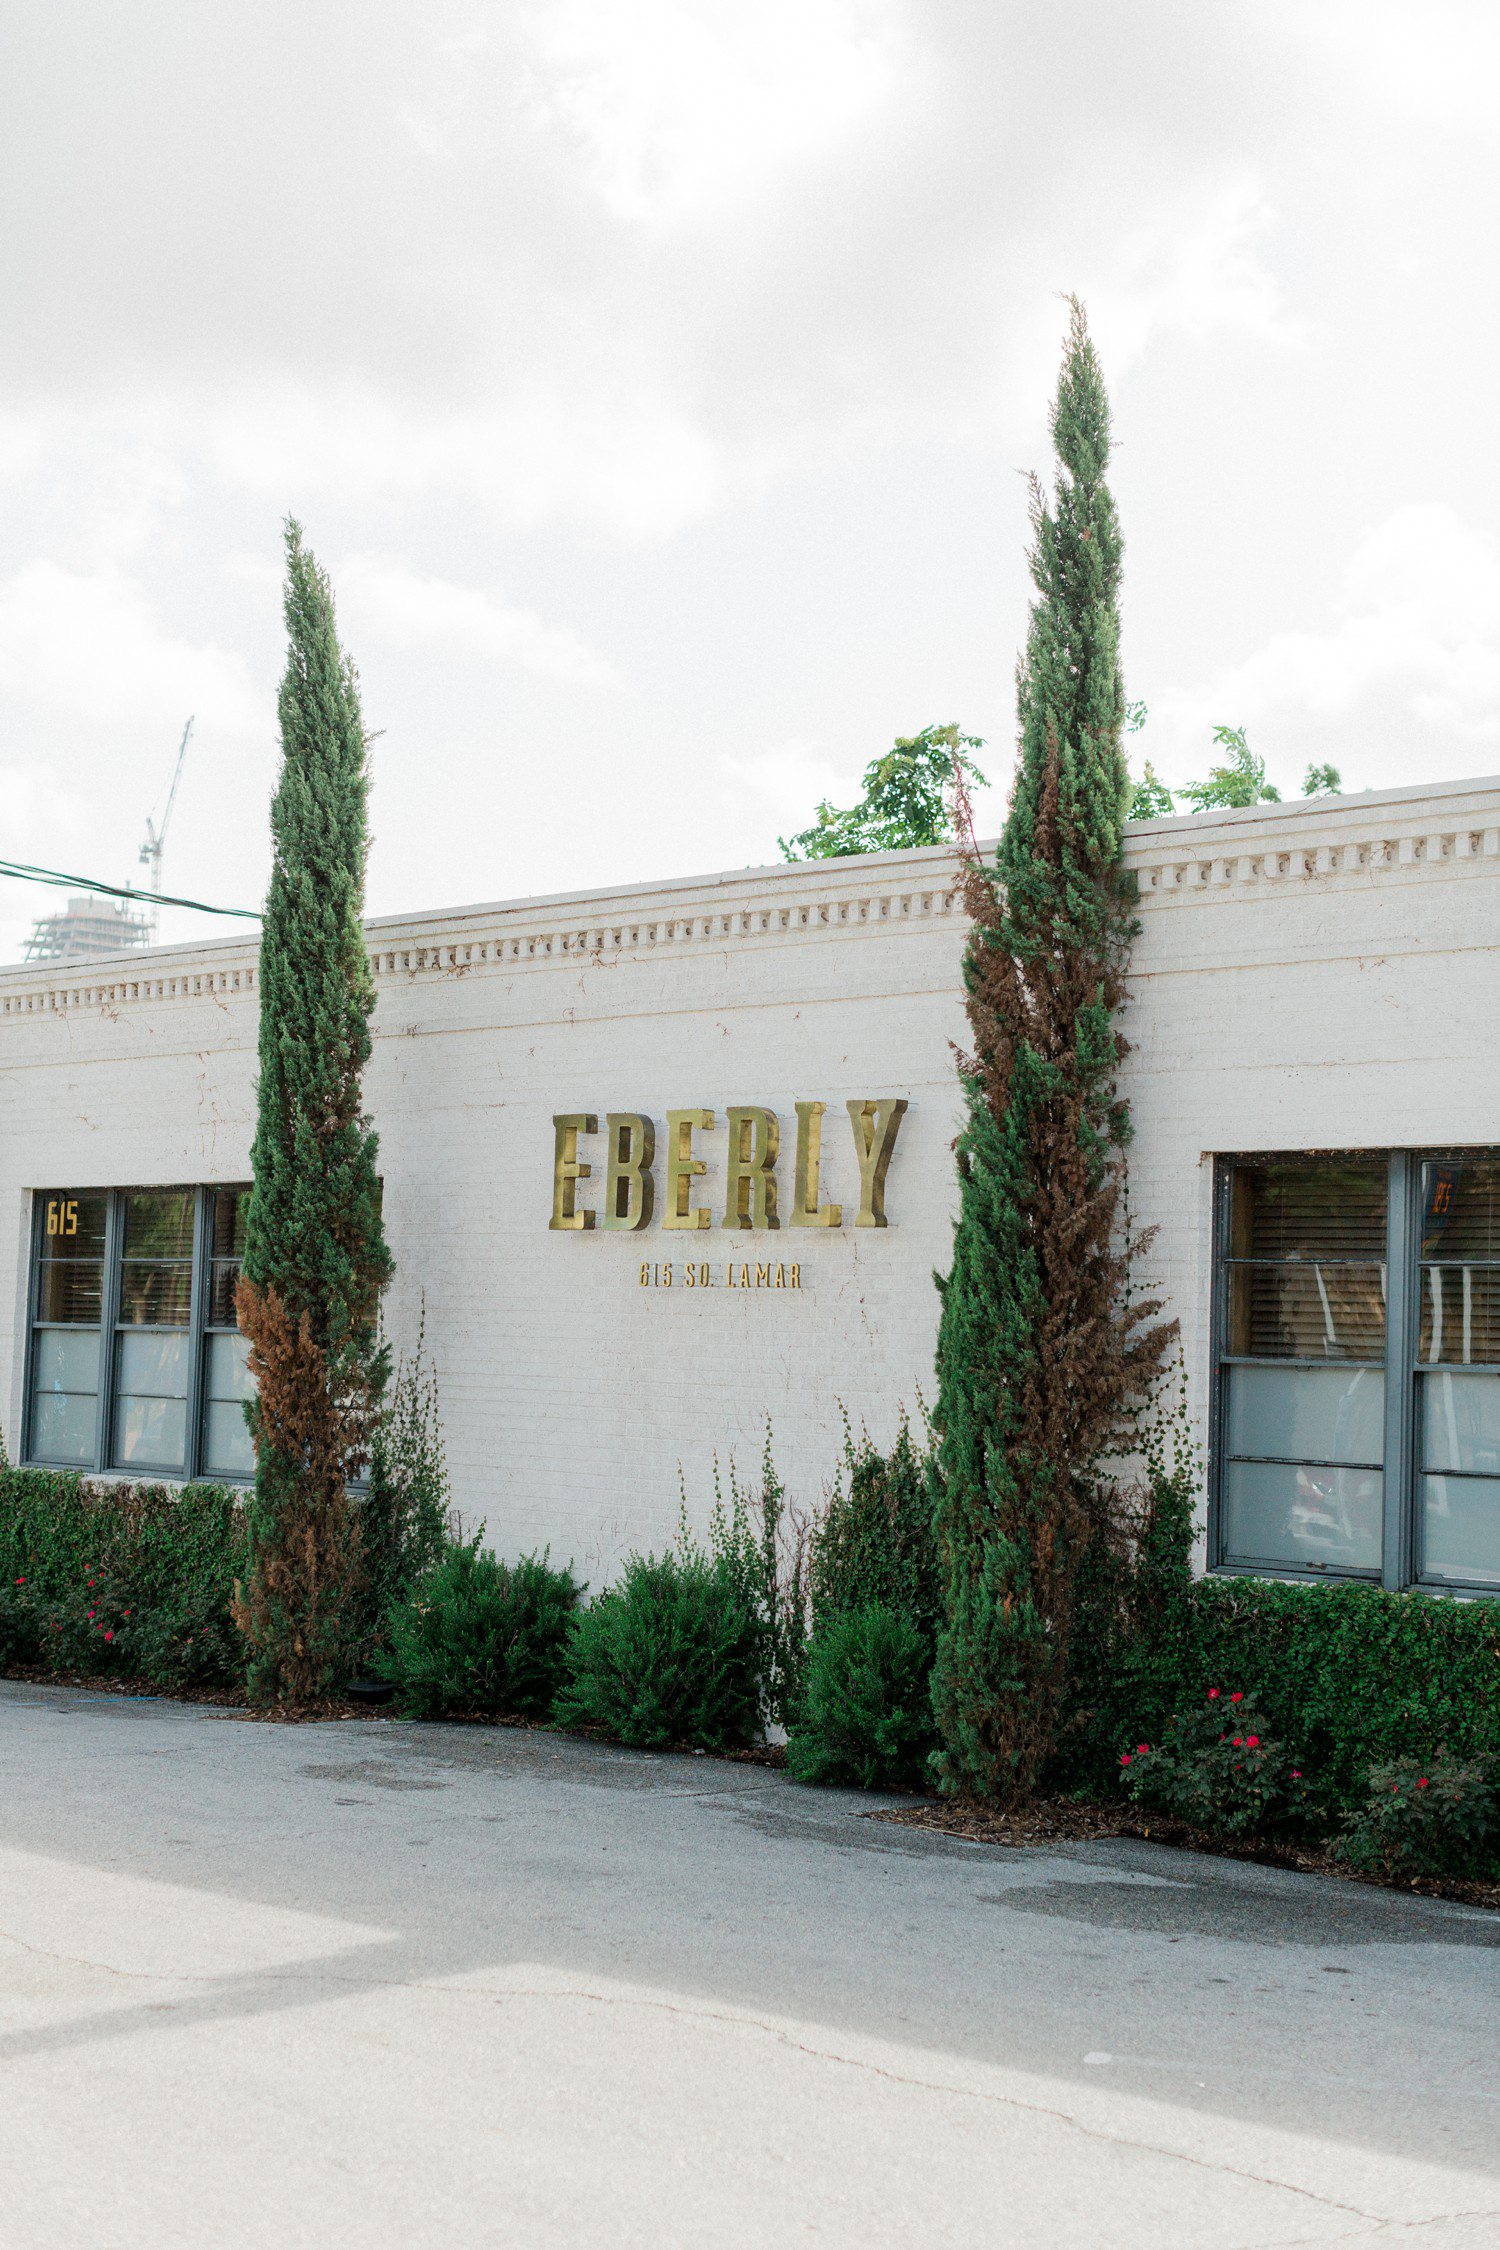 The Eberly Austin TX